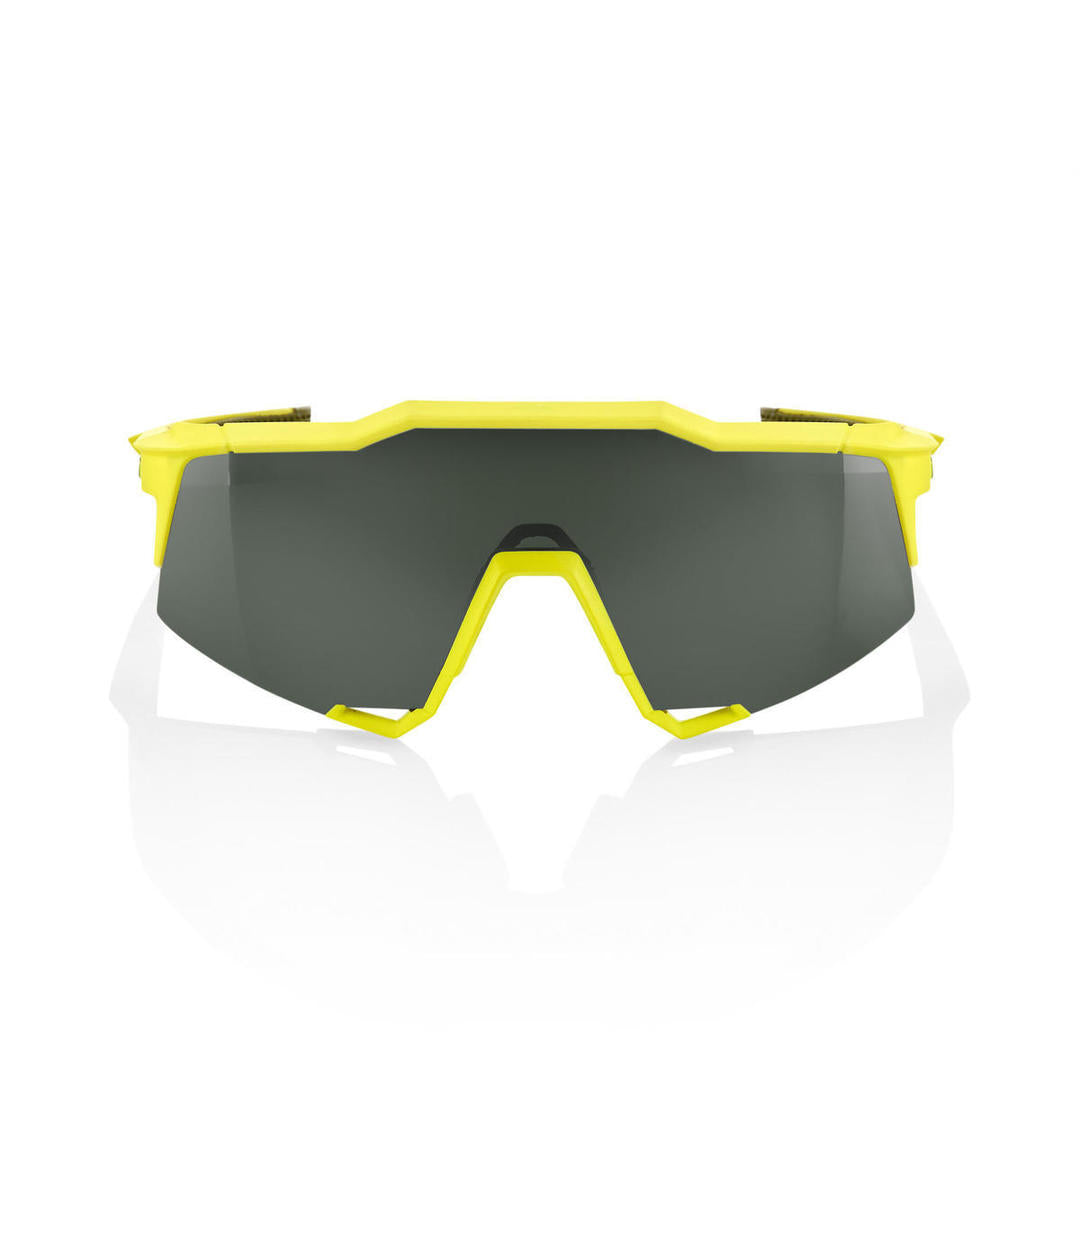 RIDE 100% Ulleres de sol Speedcraft - Soft Tact Banana Grey Green Lens